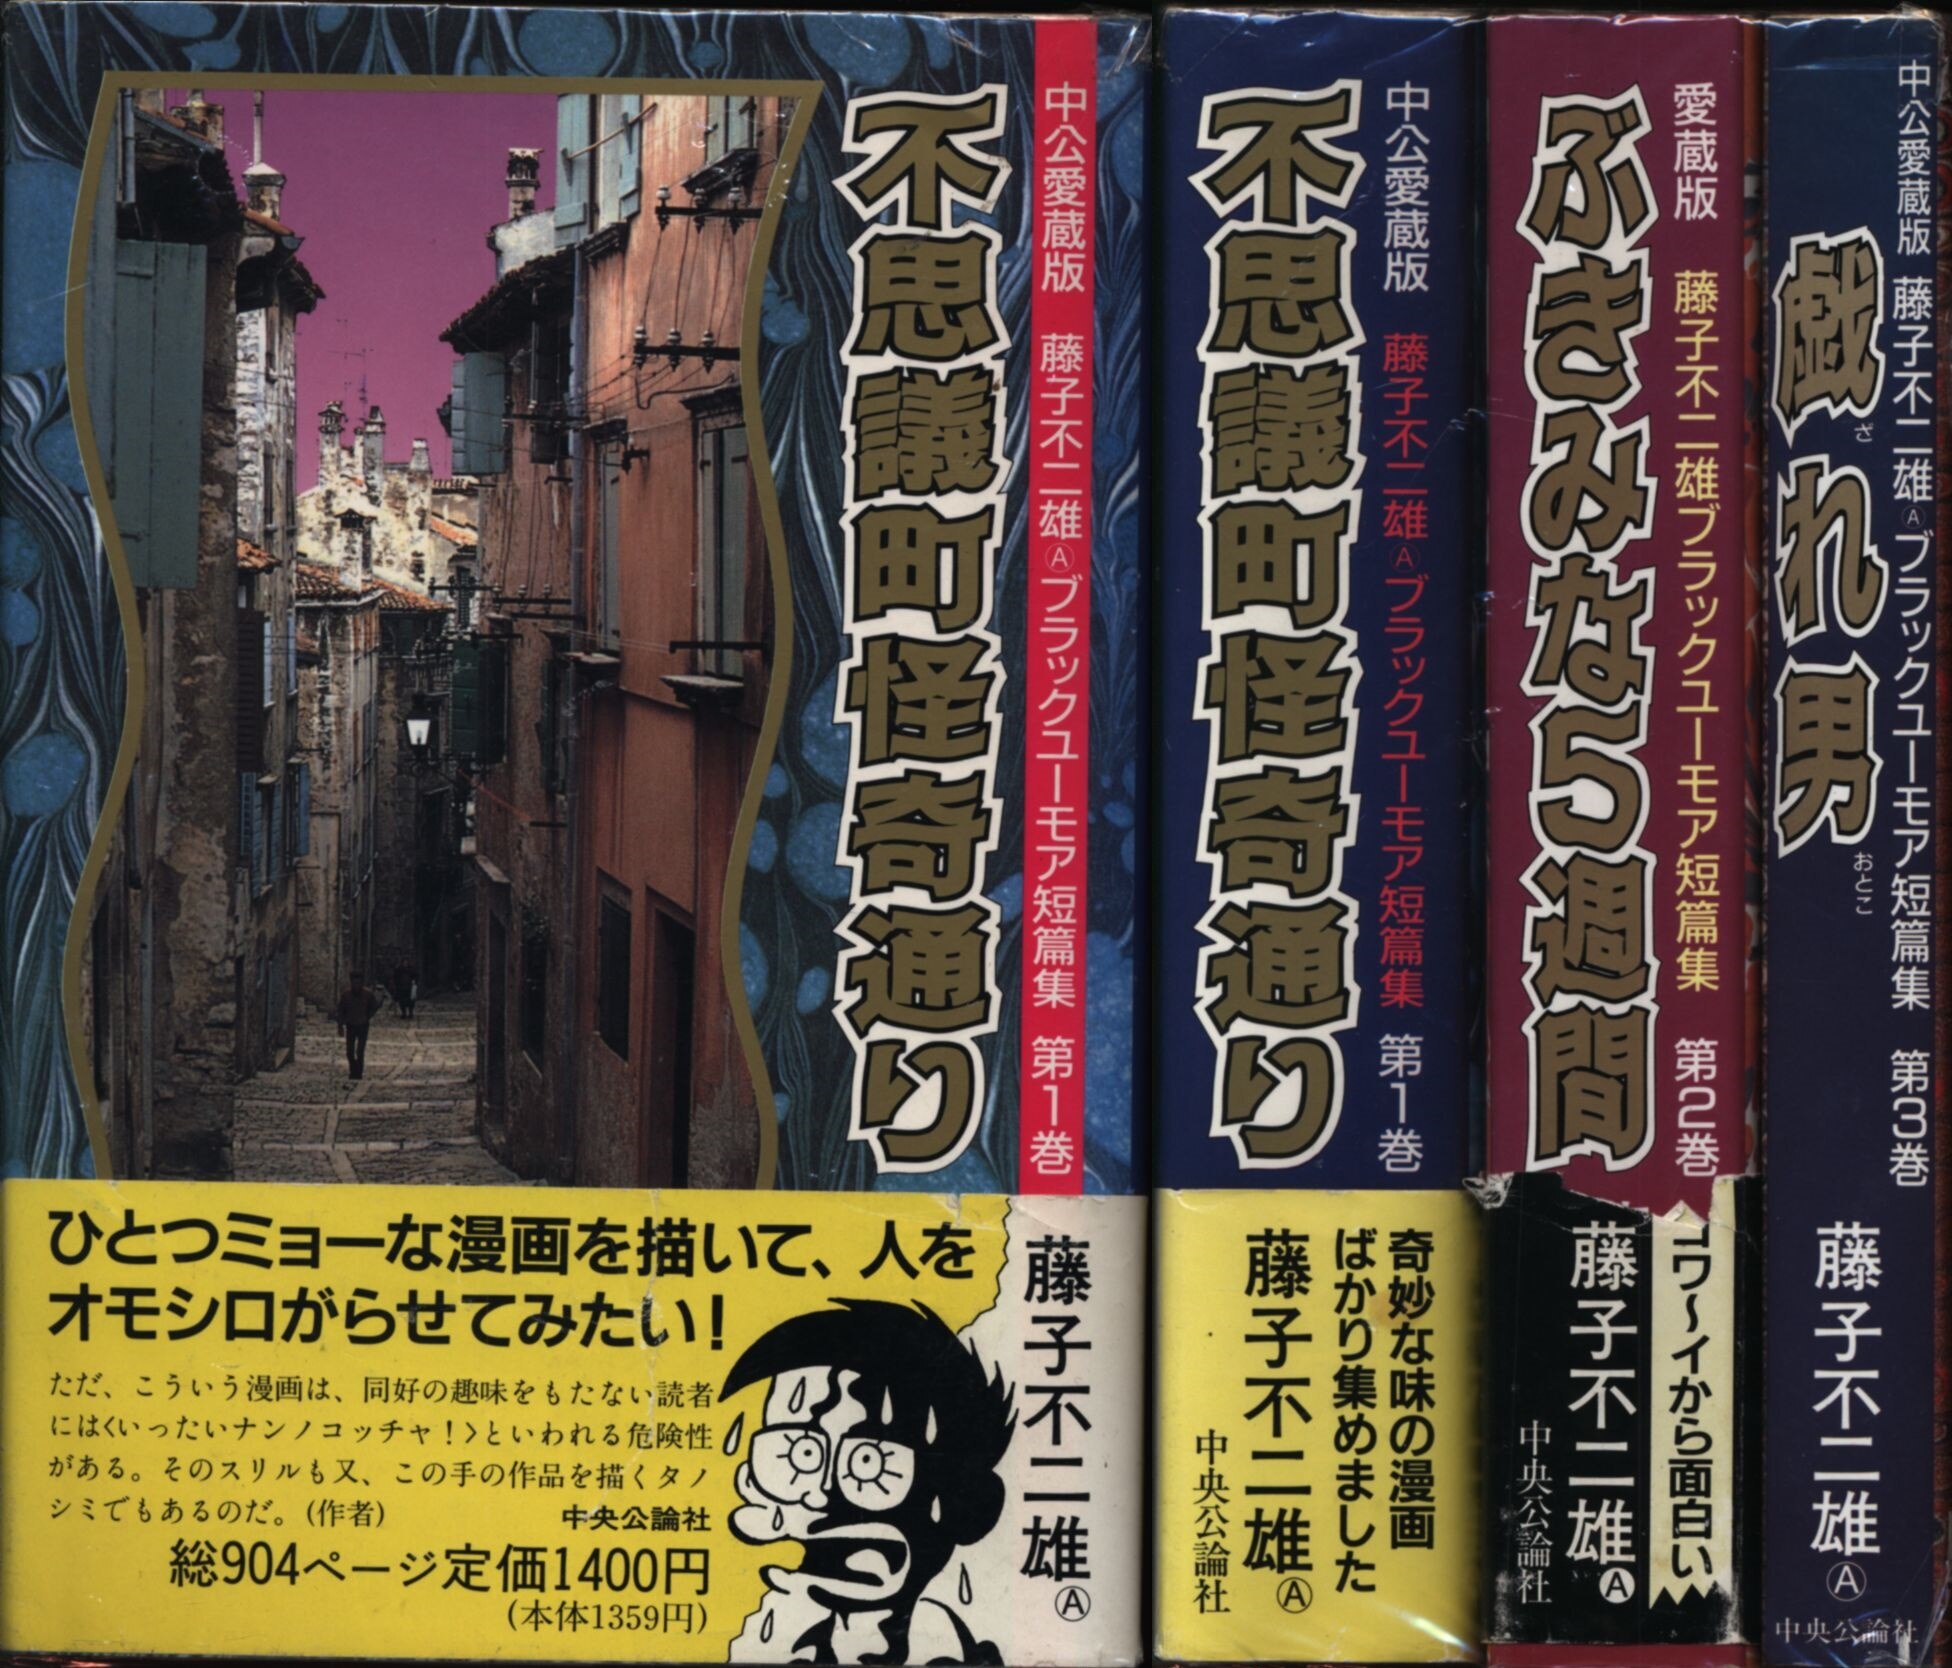 Fujiko Fujio A Motoo Abiko Black Humor Short Editing All 3 Volumes 2 Volumes Musical Instruments With Hair Recorded Set Mandarake Online Shop